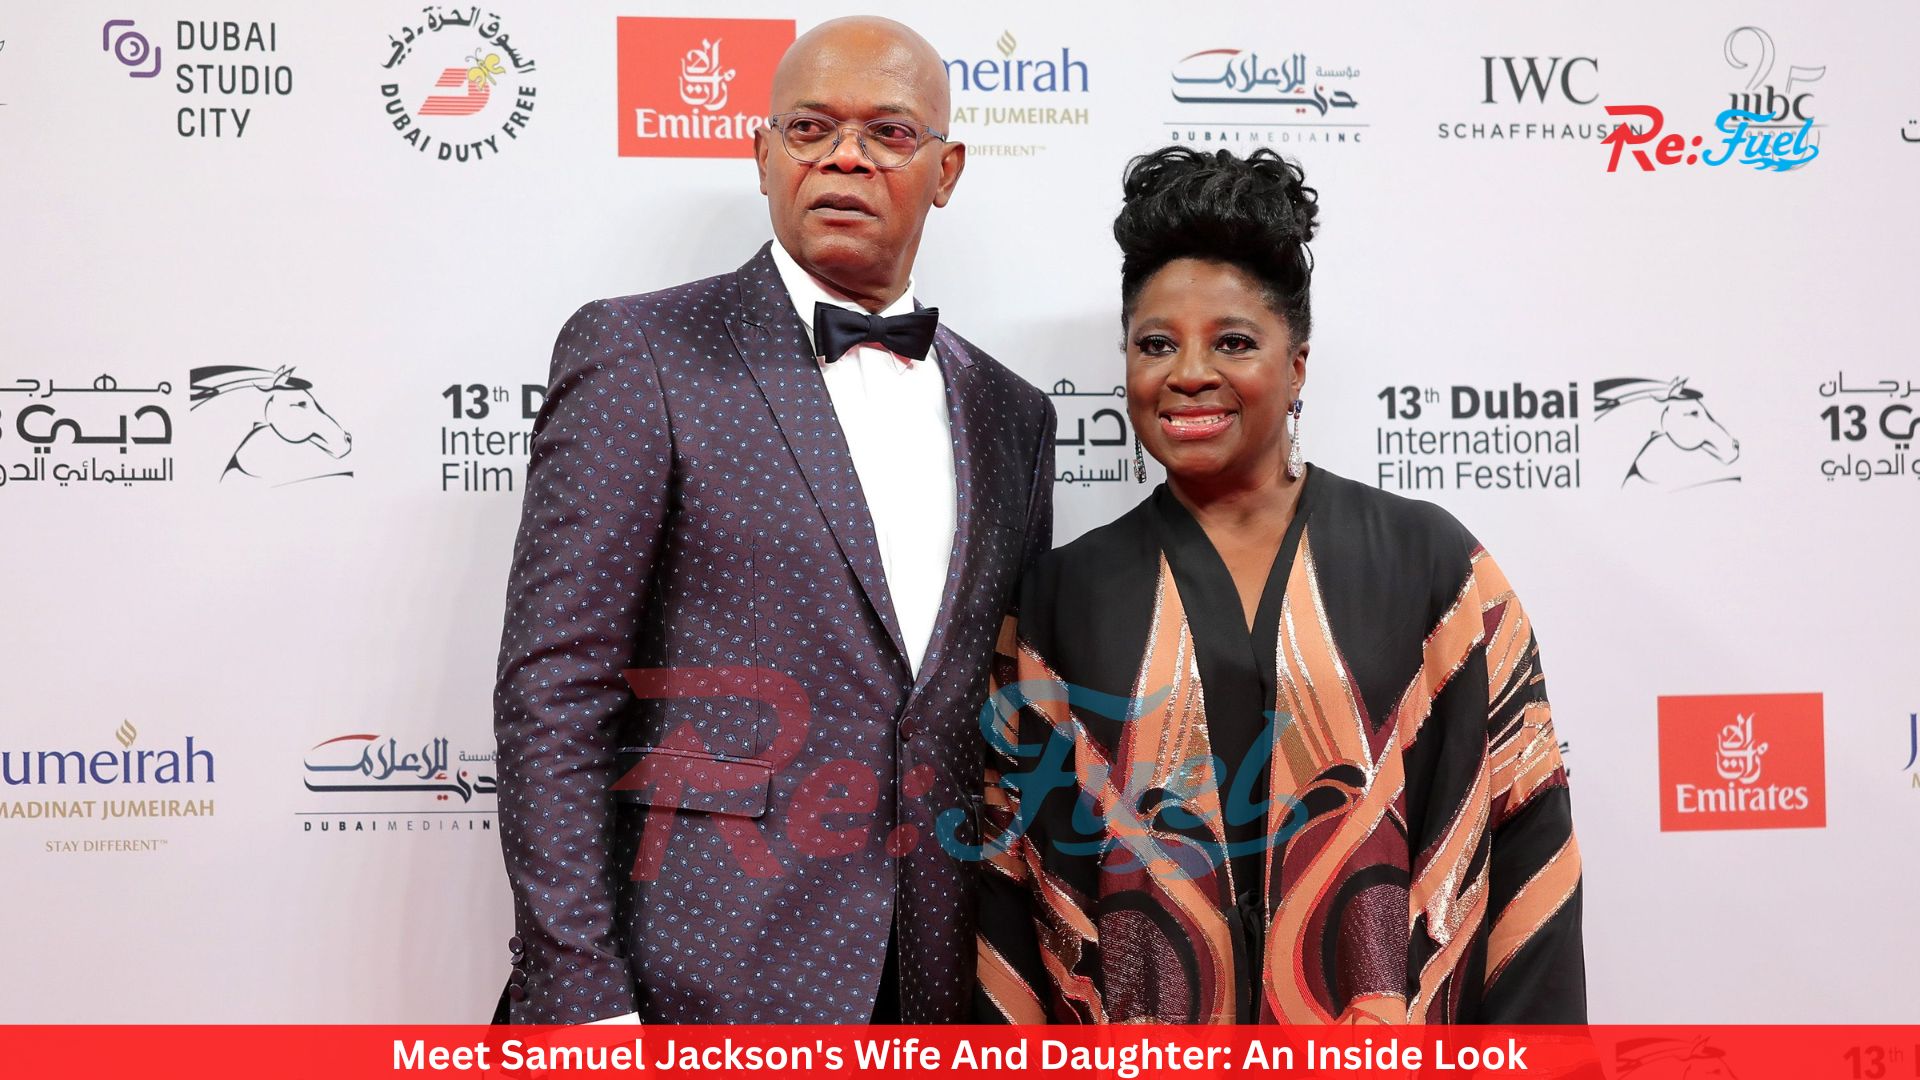 Meet Samuel Jackson's Wife And Daughter: An Inside Look